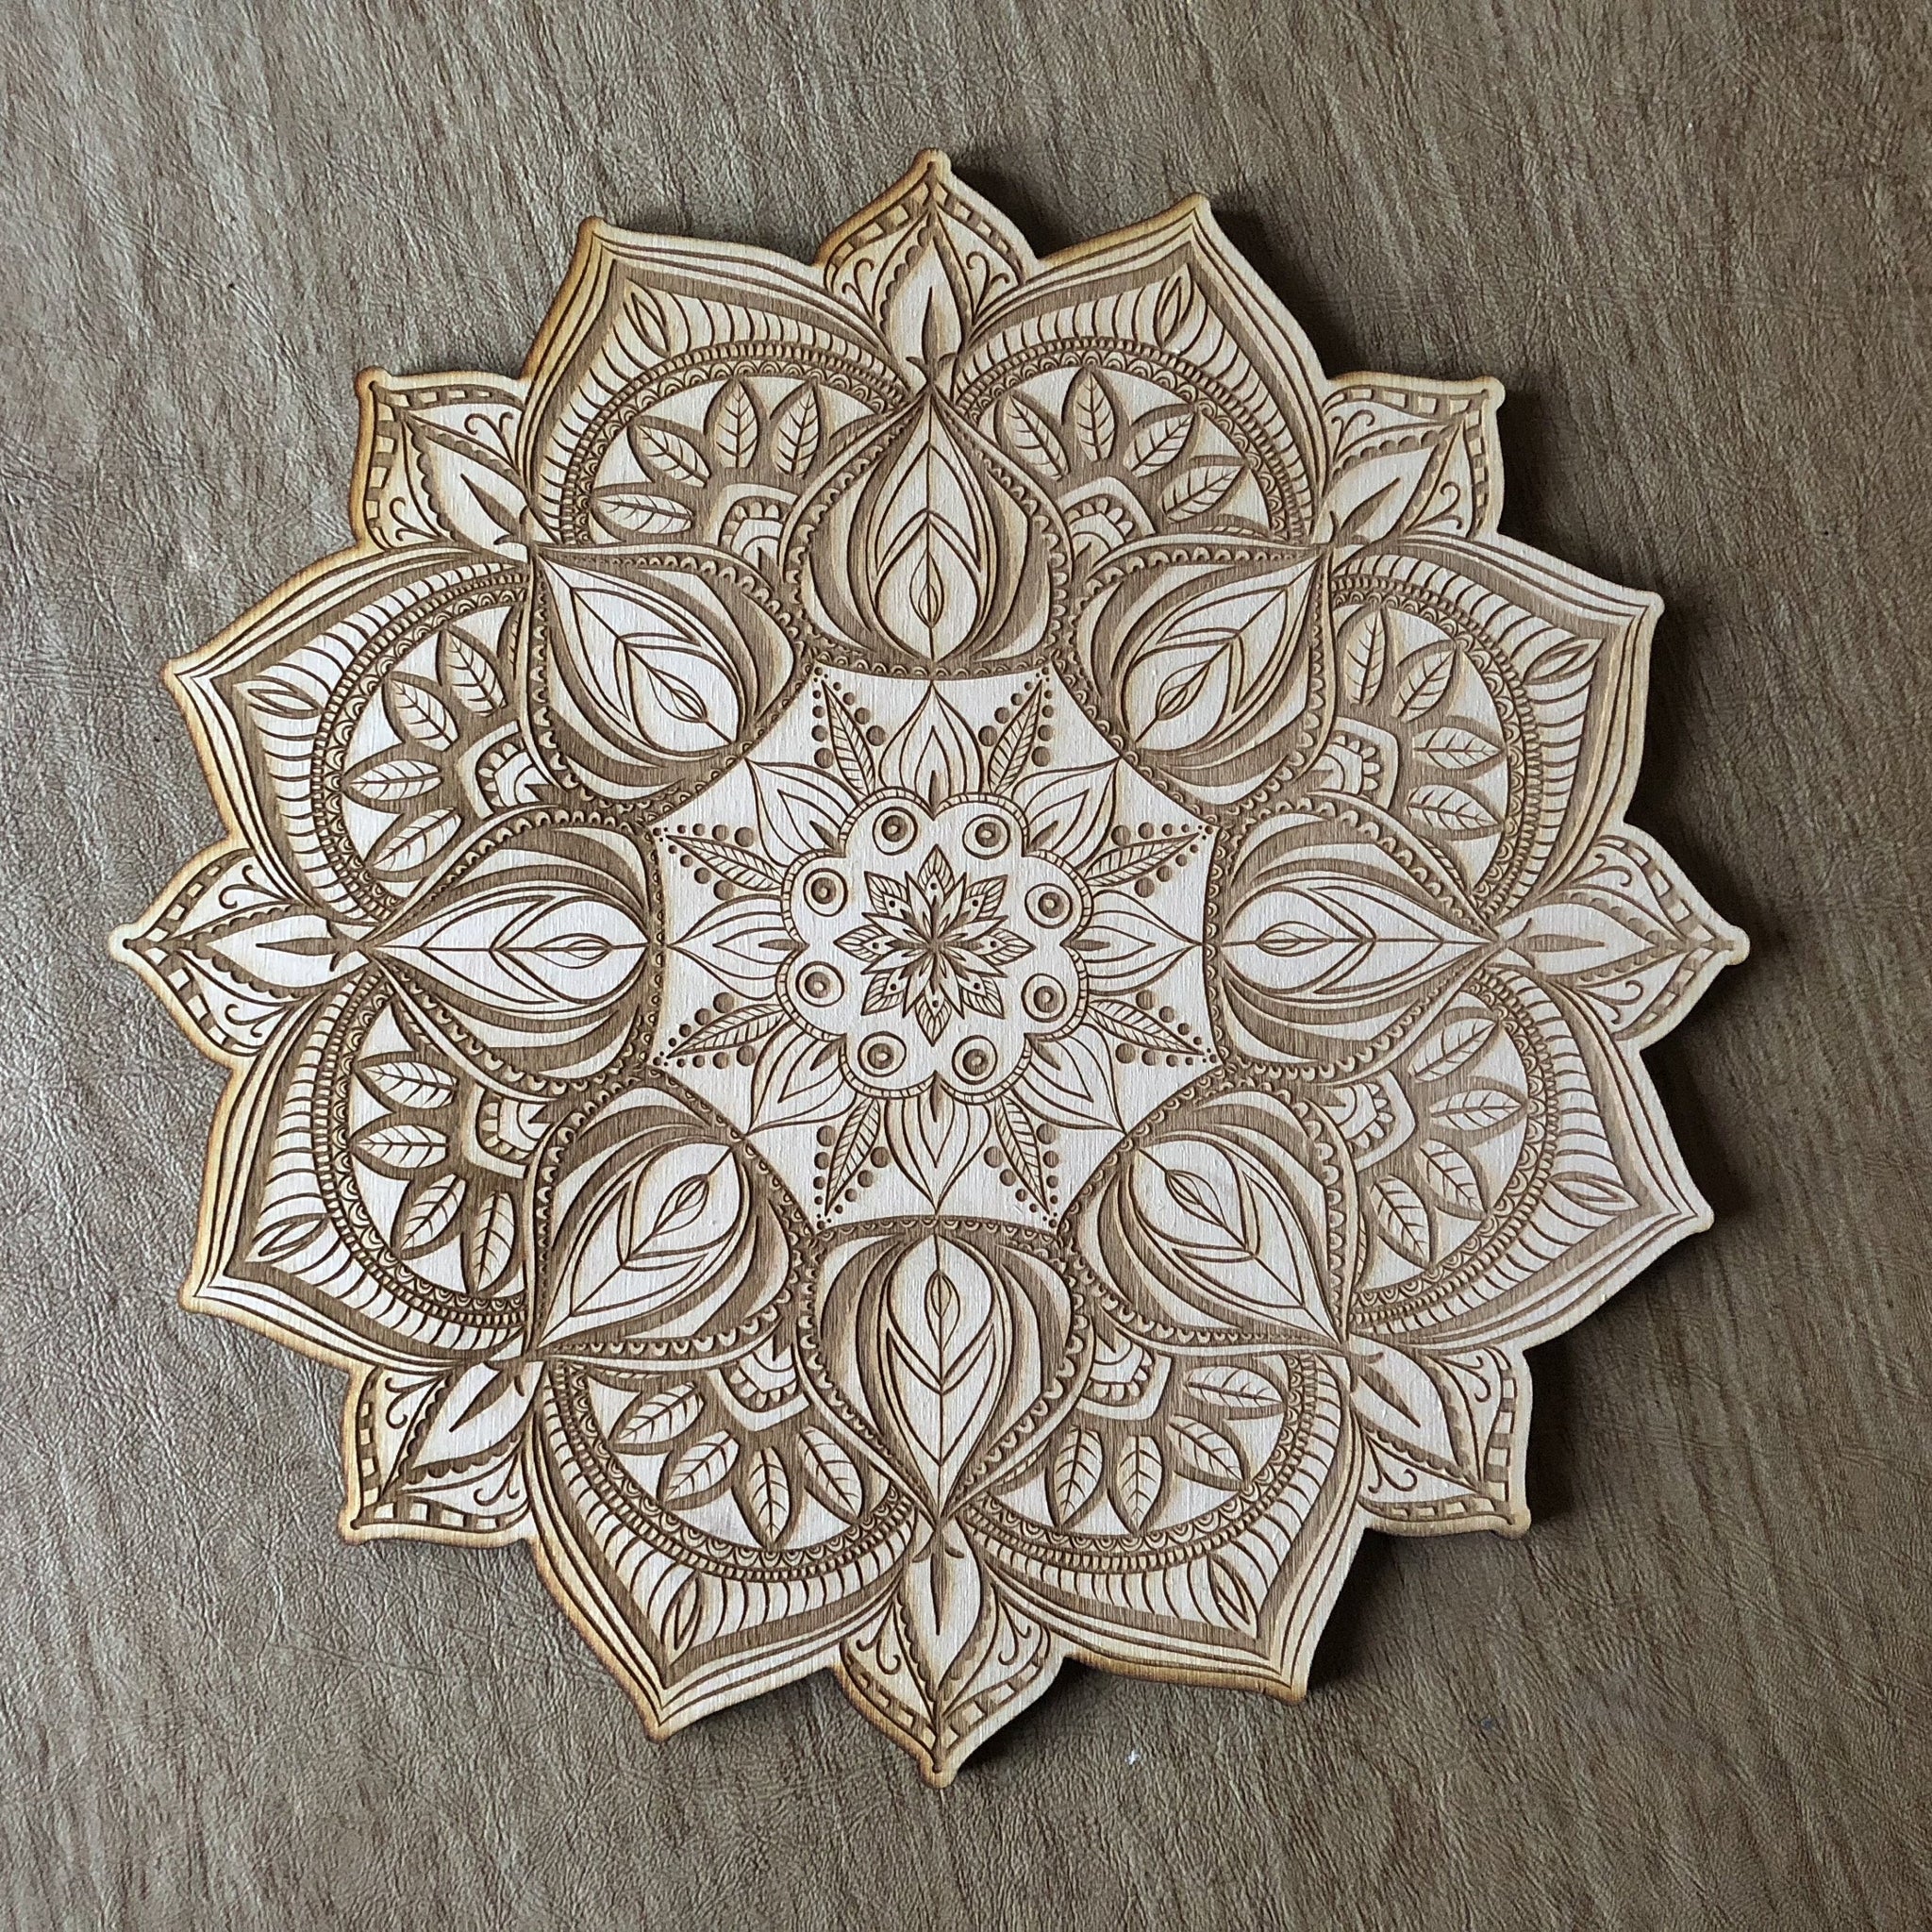 Mandala Crystal Grid Boards